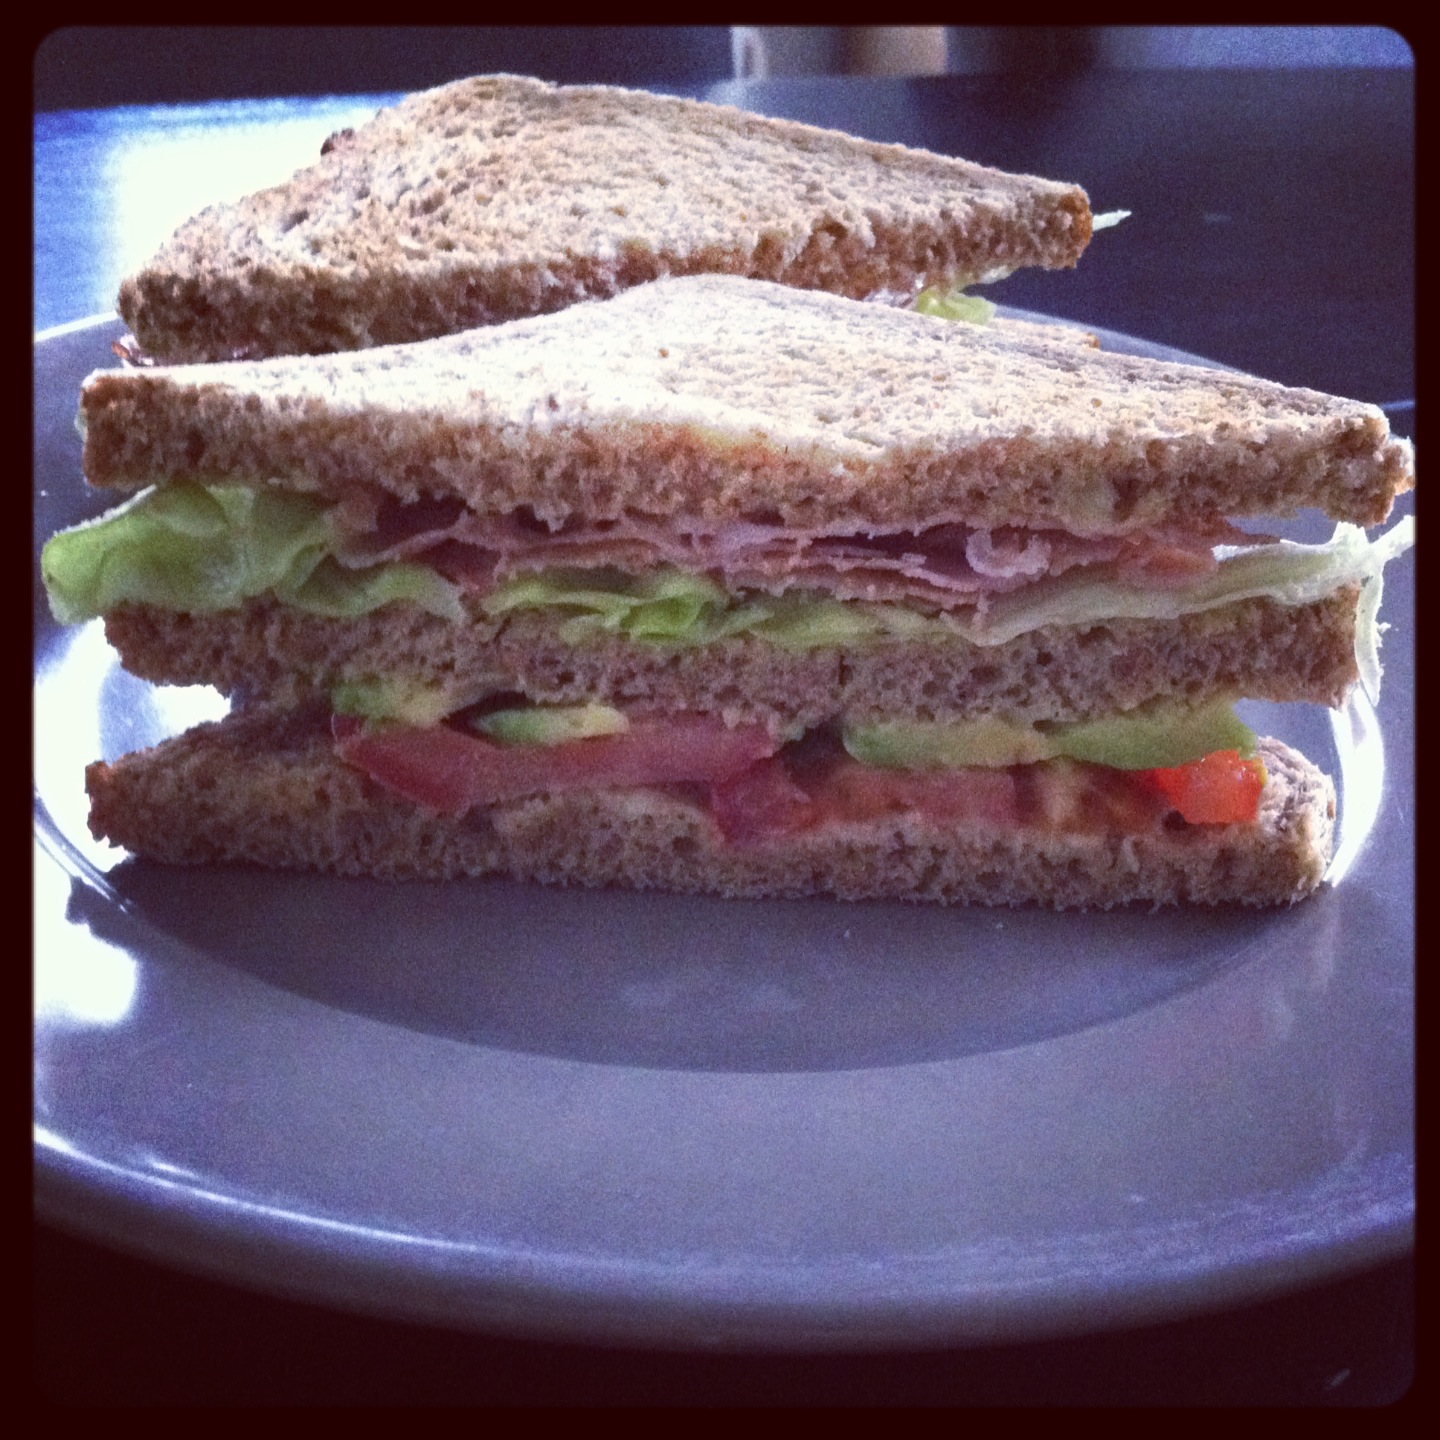 Avocado BLT sandwich